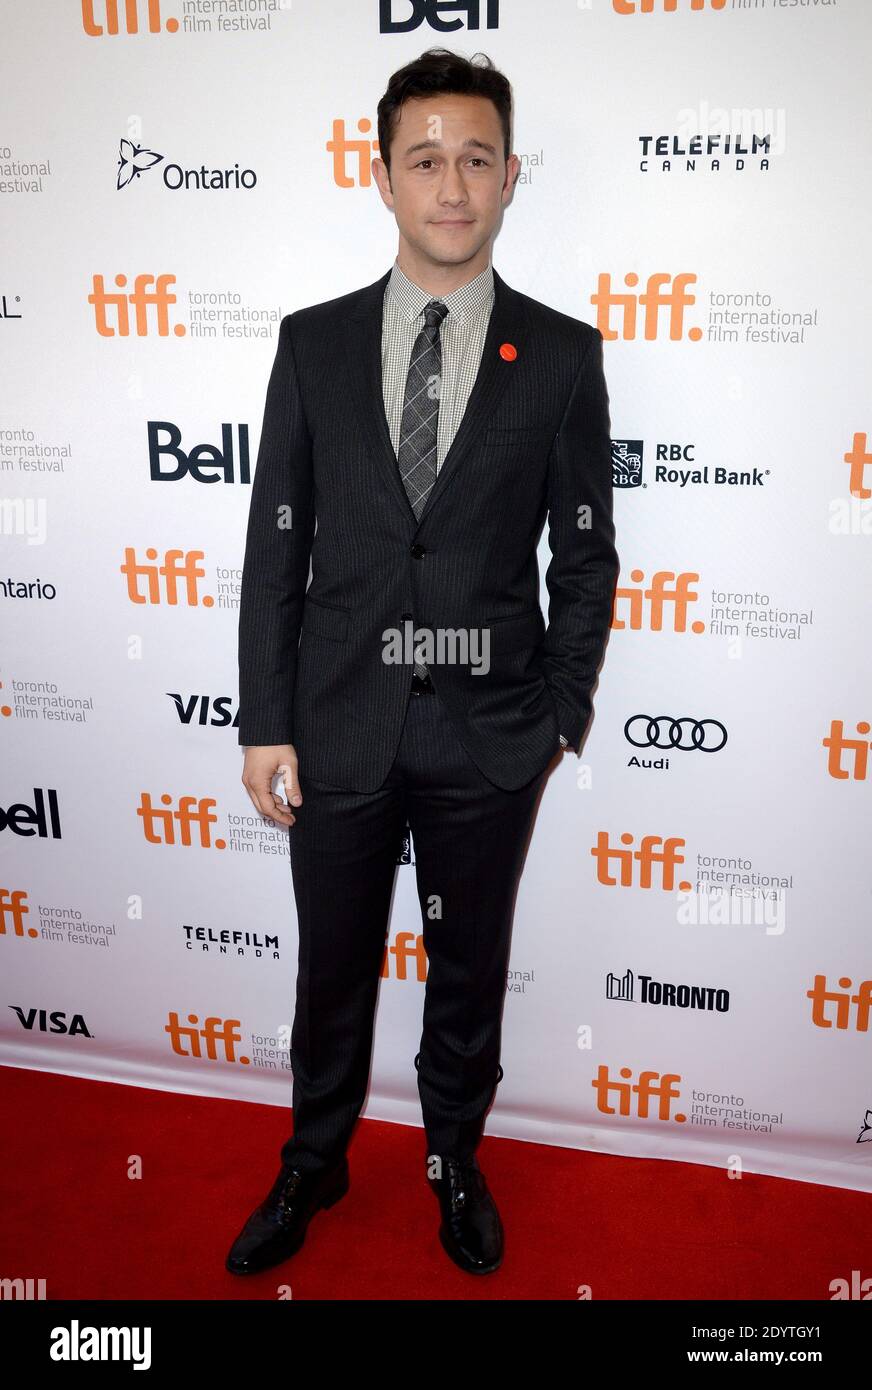 Joseph Gordon-Levitt attends the Don Jon screening at the 2013 Toronto International Film Festival, Toronto, Canada on September 10, 2013. Photo by Lionel Hahn/ABACAPRESS.COM Stock Photo